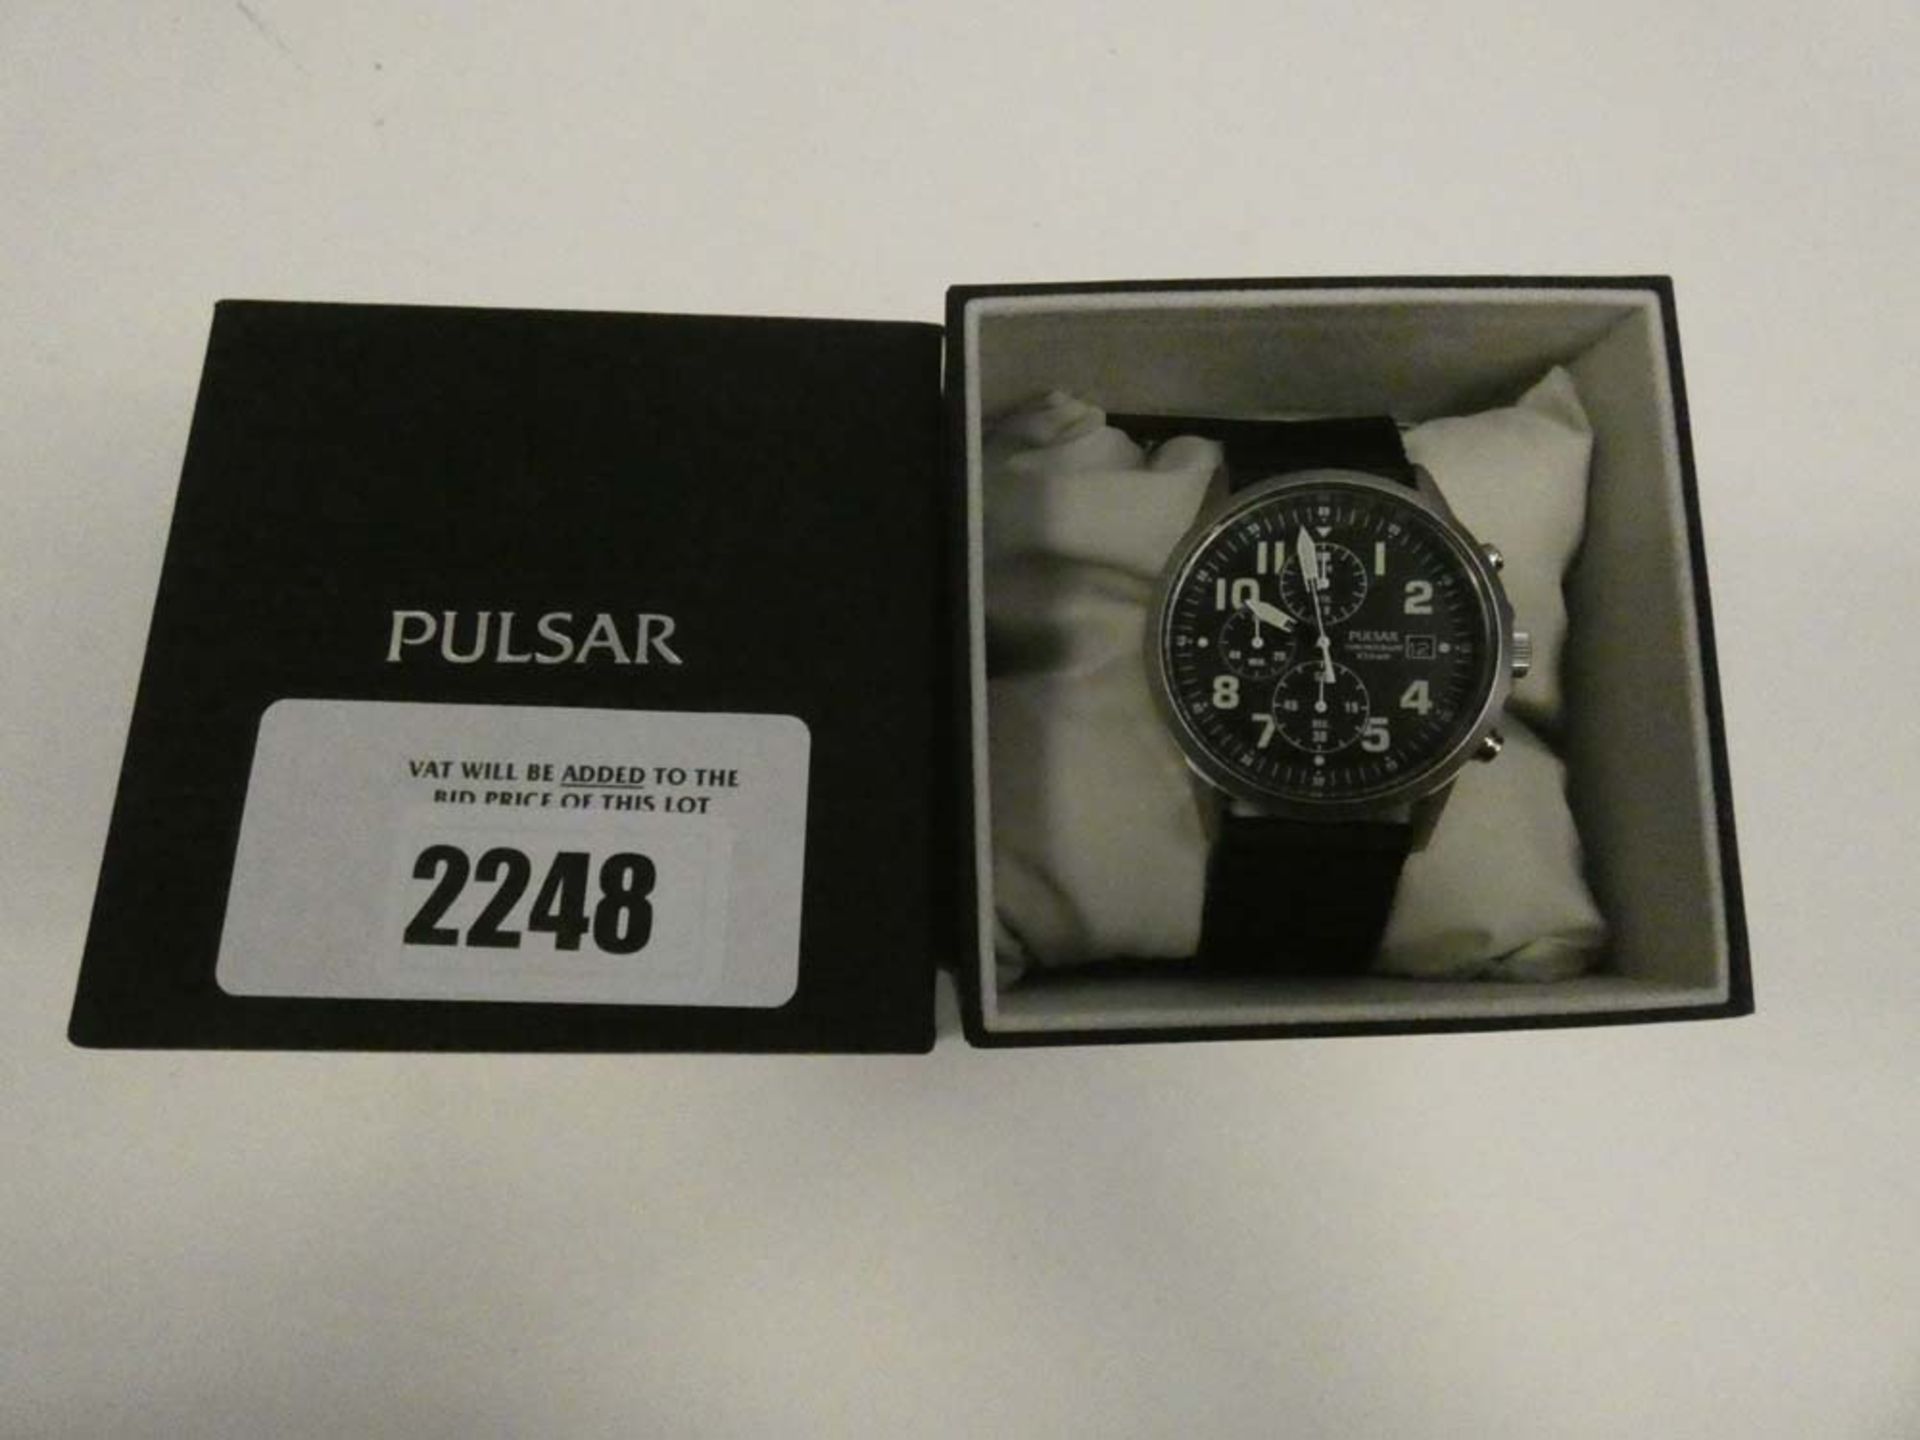 Pulsar PM3 175 wristwatch in box